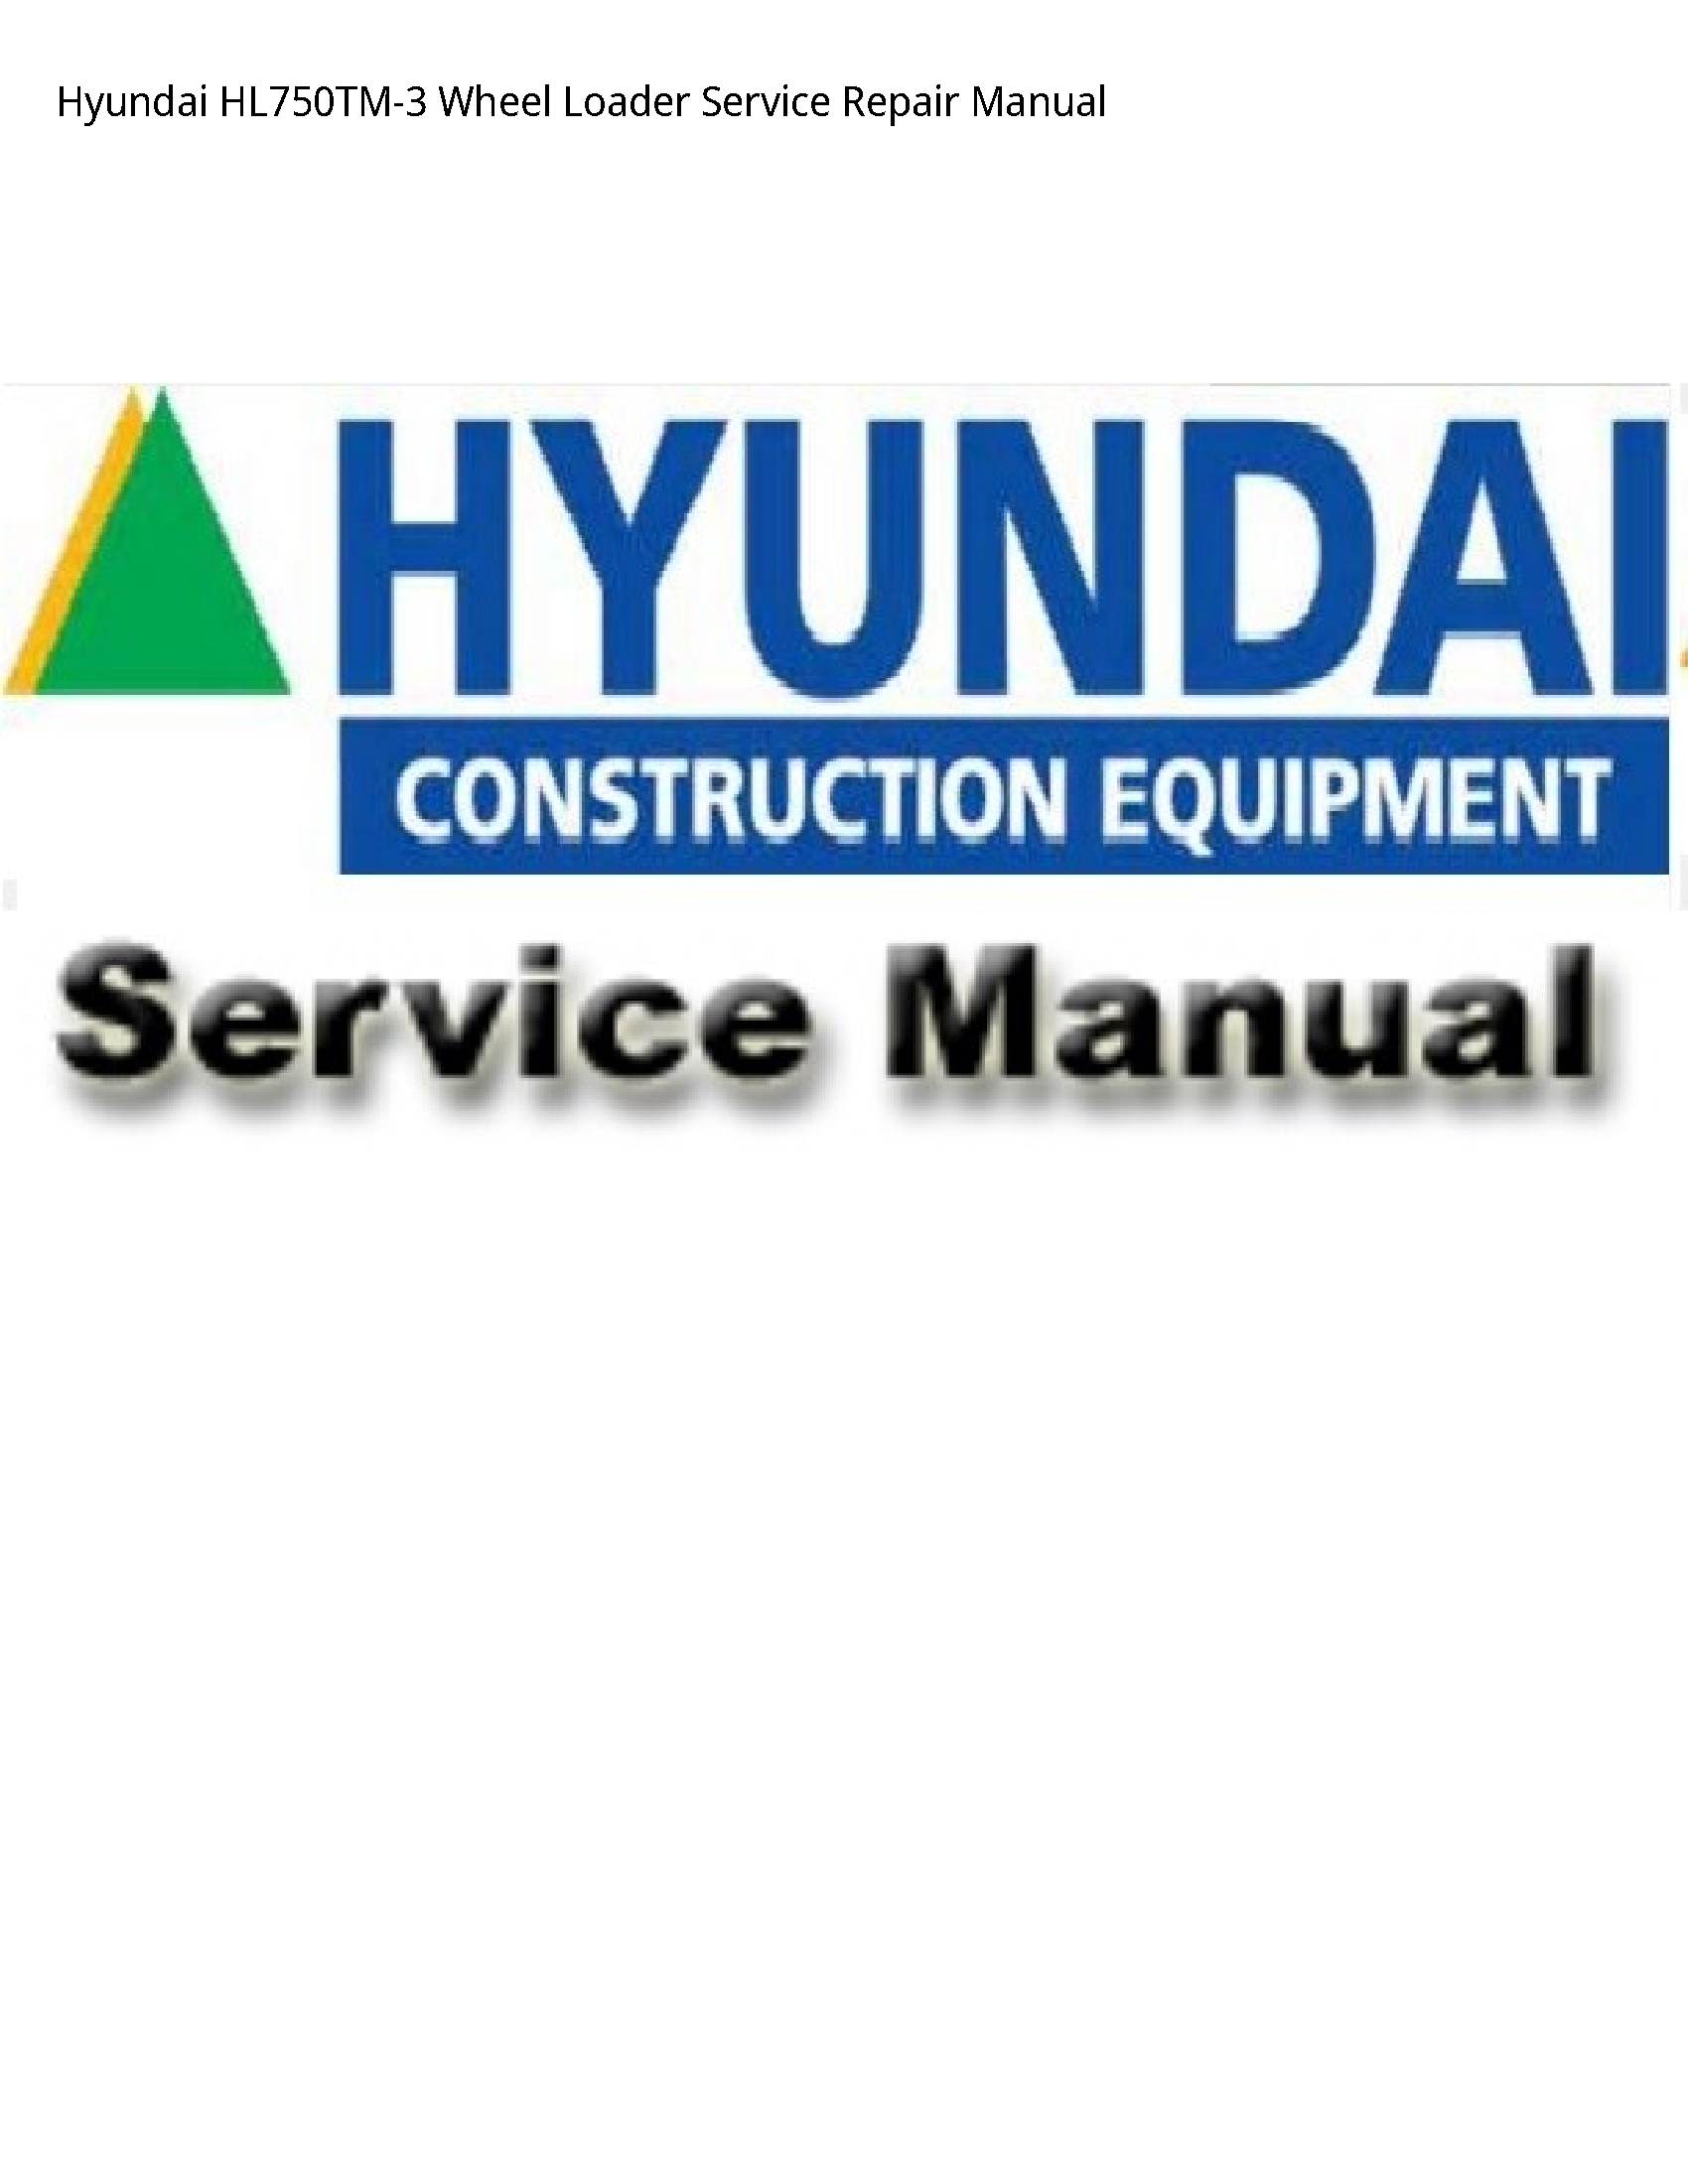 Hyundai HL750TM-3 Wheel Loader manual